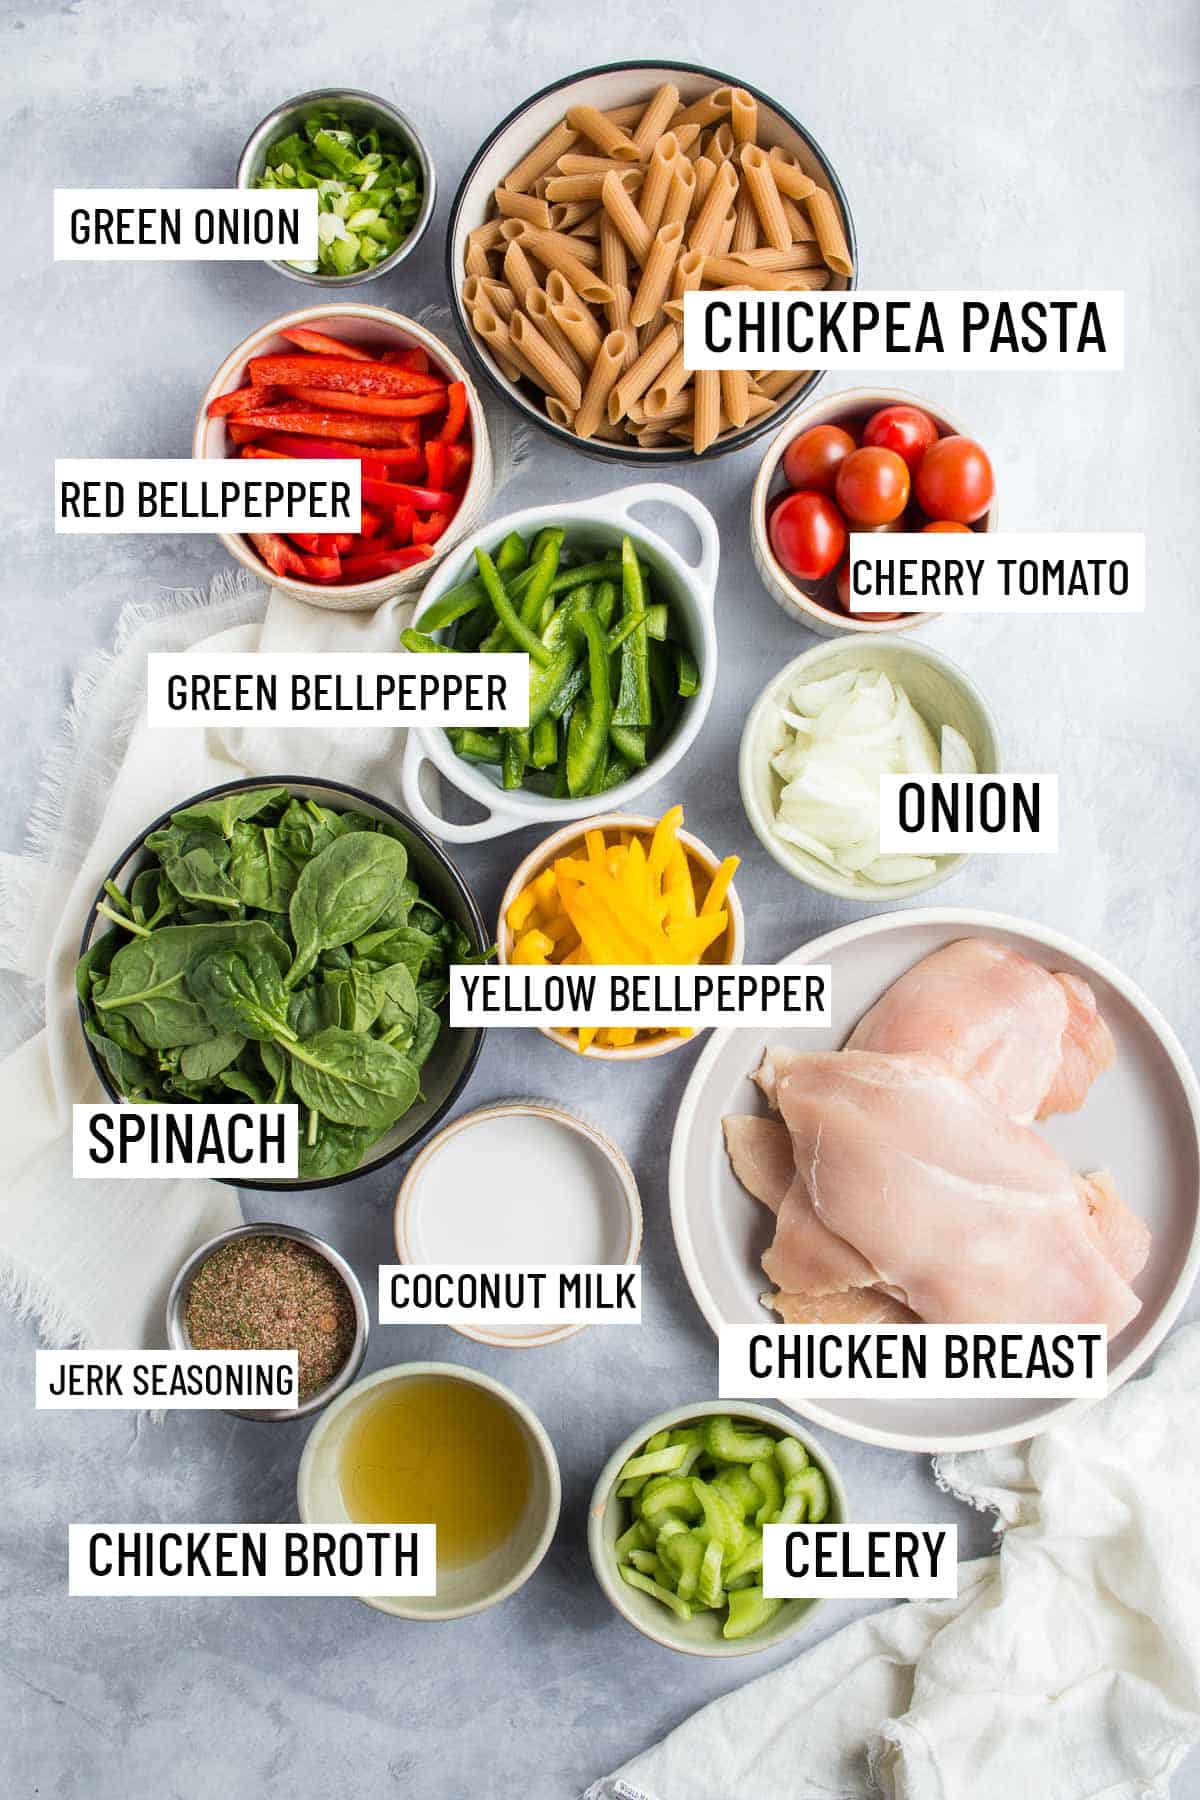 Ingredients for easy jerk chicken recipe.